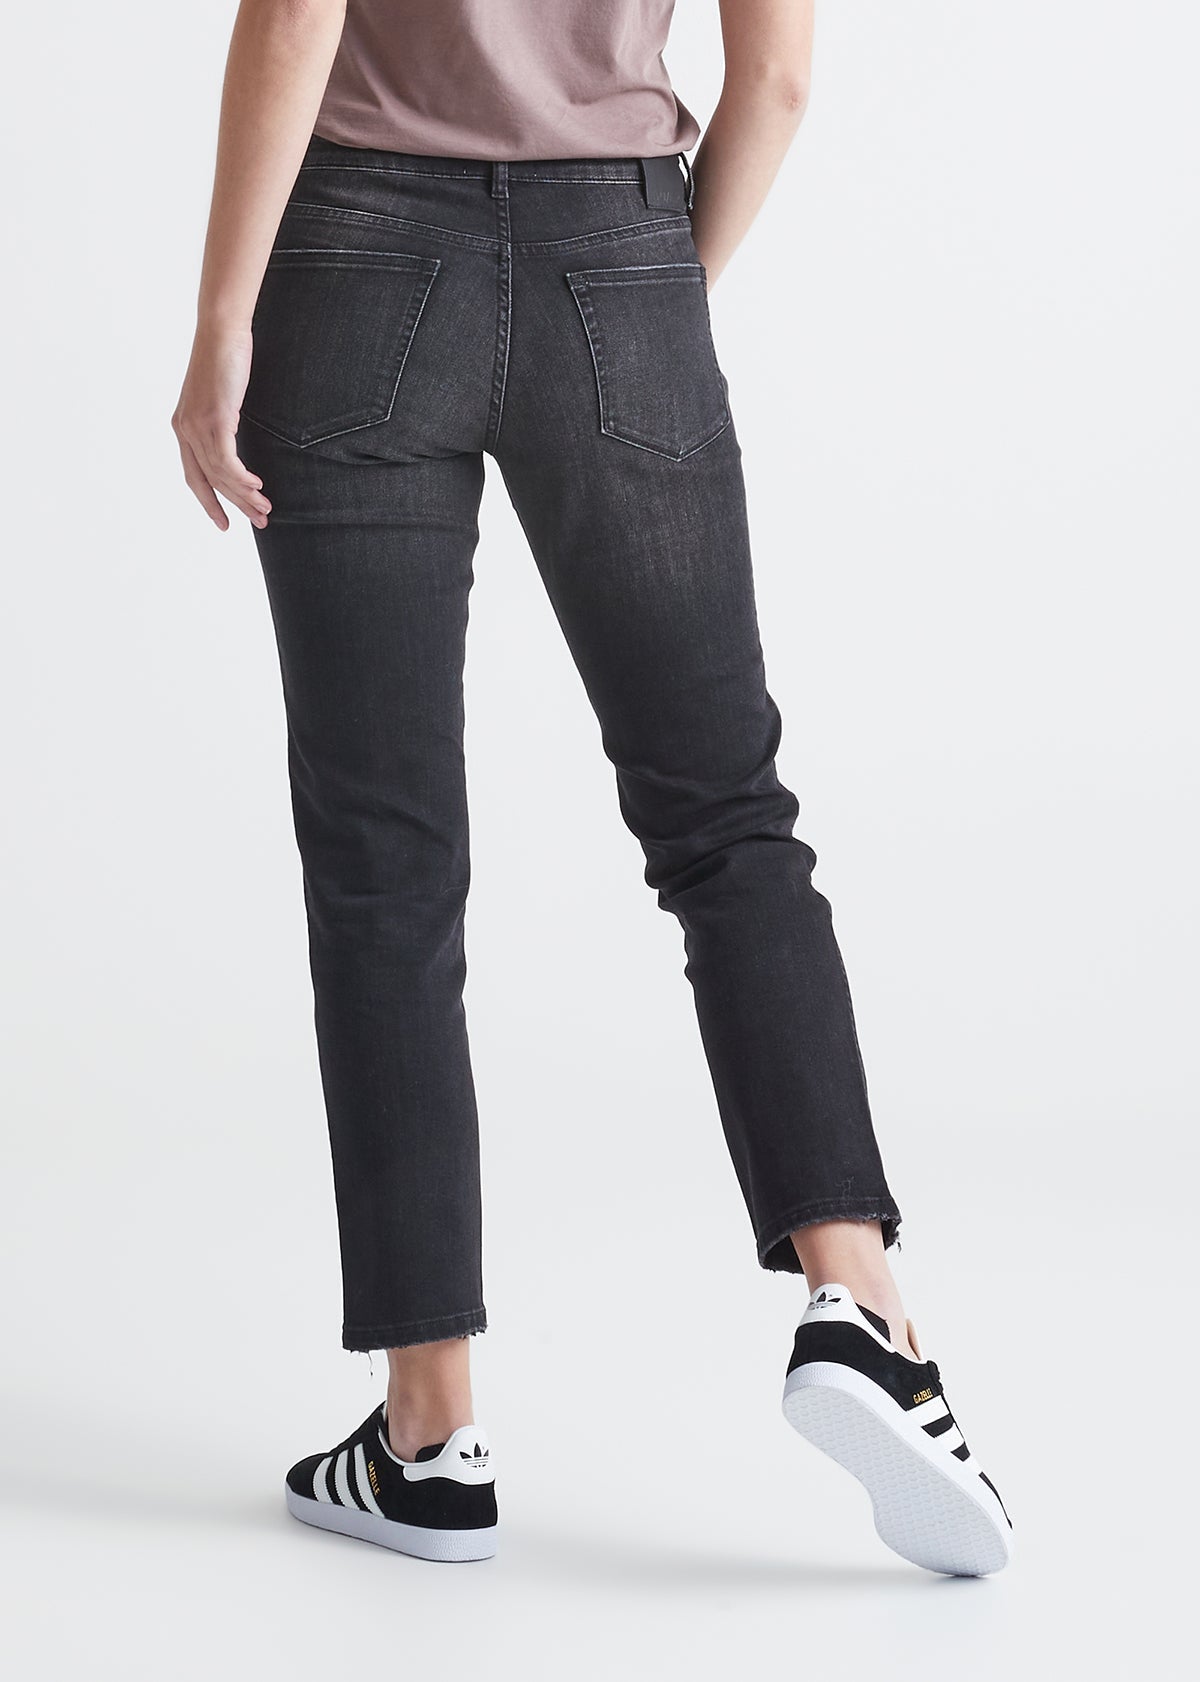 Noir Triple XXX Women's Skinny Cropped Jeans Low Rise Stretch Denim Capri  Pants